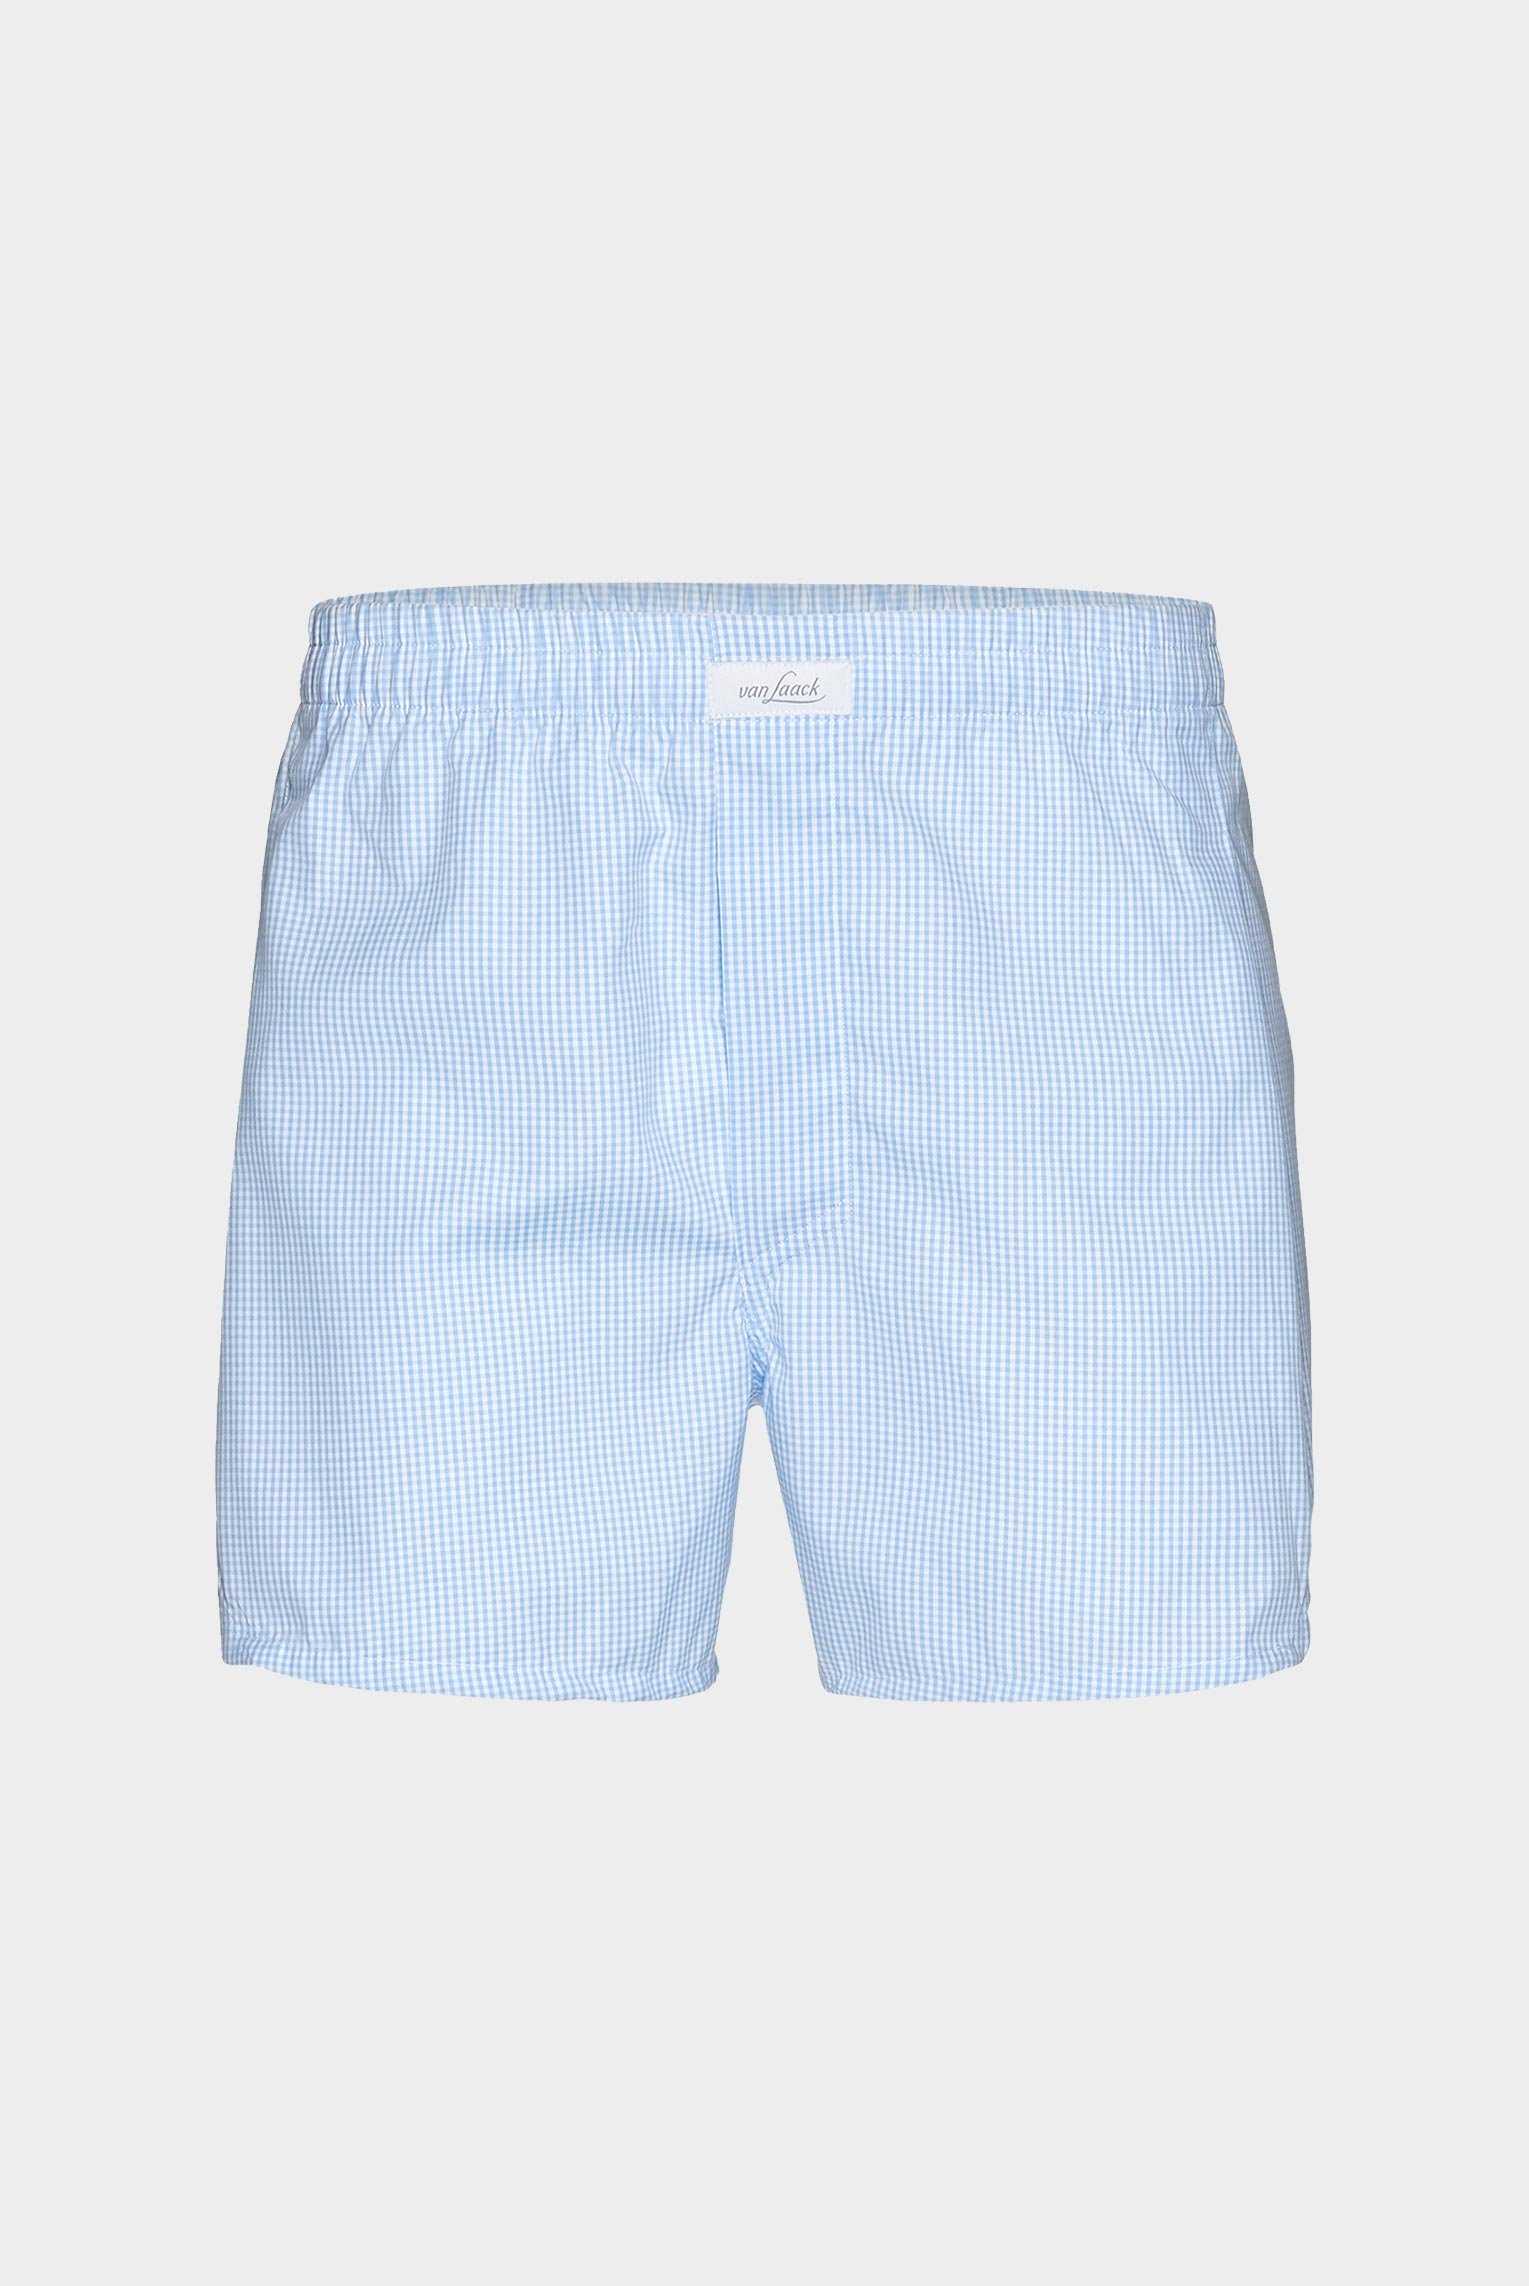 Underwear+Small Gingham Checked Poplin Boxer Shorts+91.1100.V4.141787.720.46